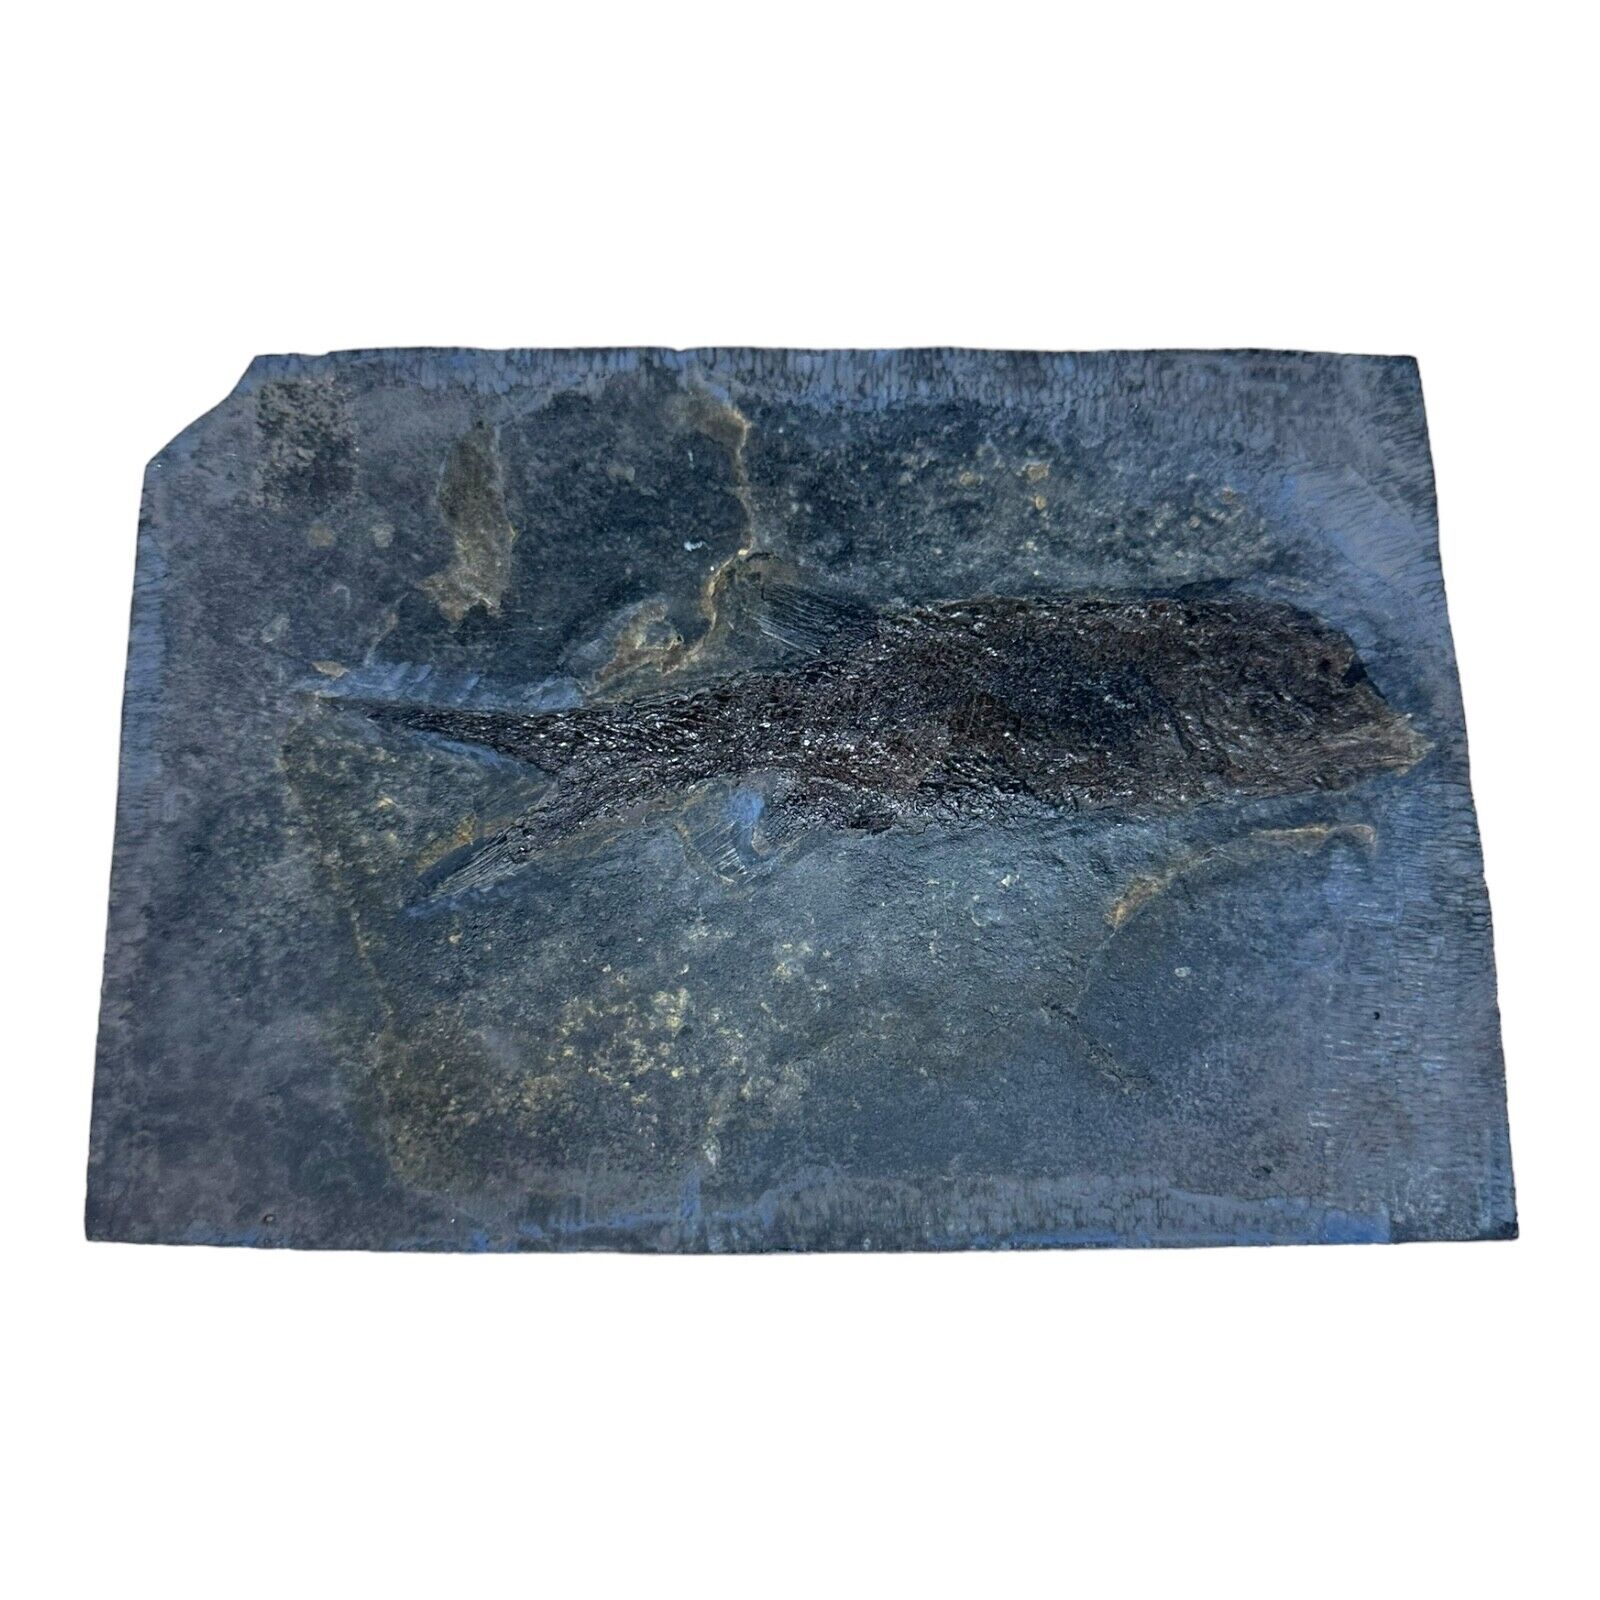 Amblypterus Fossil Fish - Upper/Lower Permian - Germany